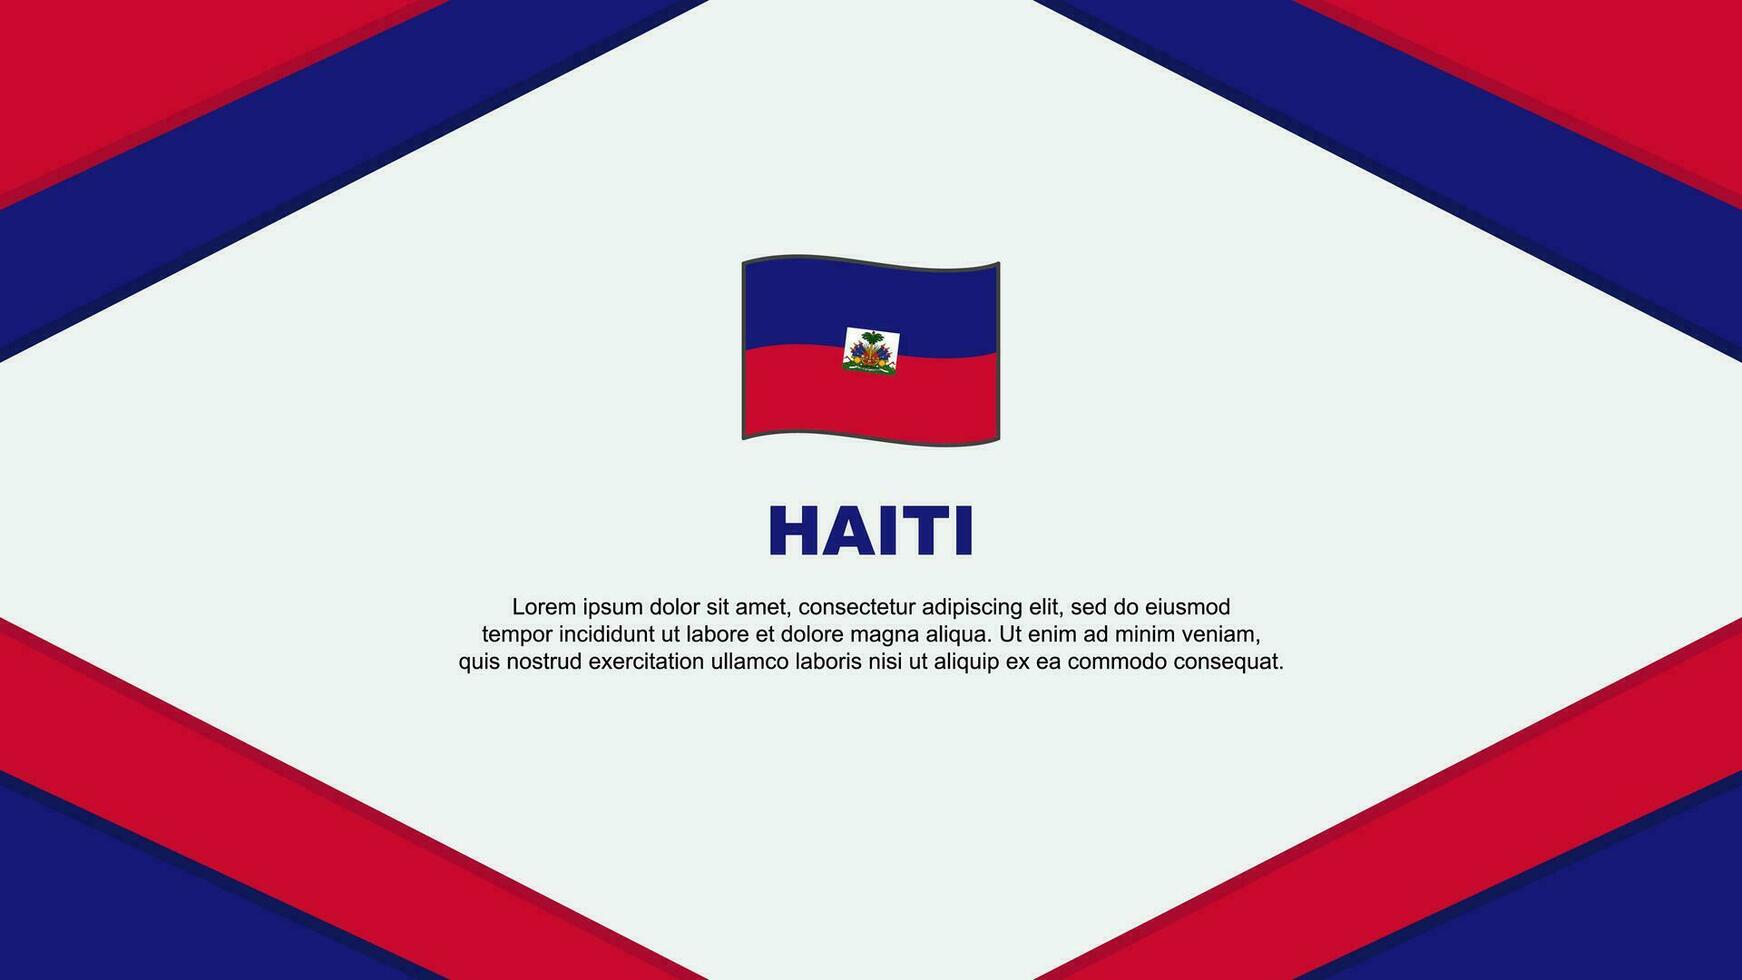 Haiti Flag Abstract Background Design Template. Haiti Independence Day Banner Cartoon Vector Illustration. Haiti Illustration